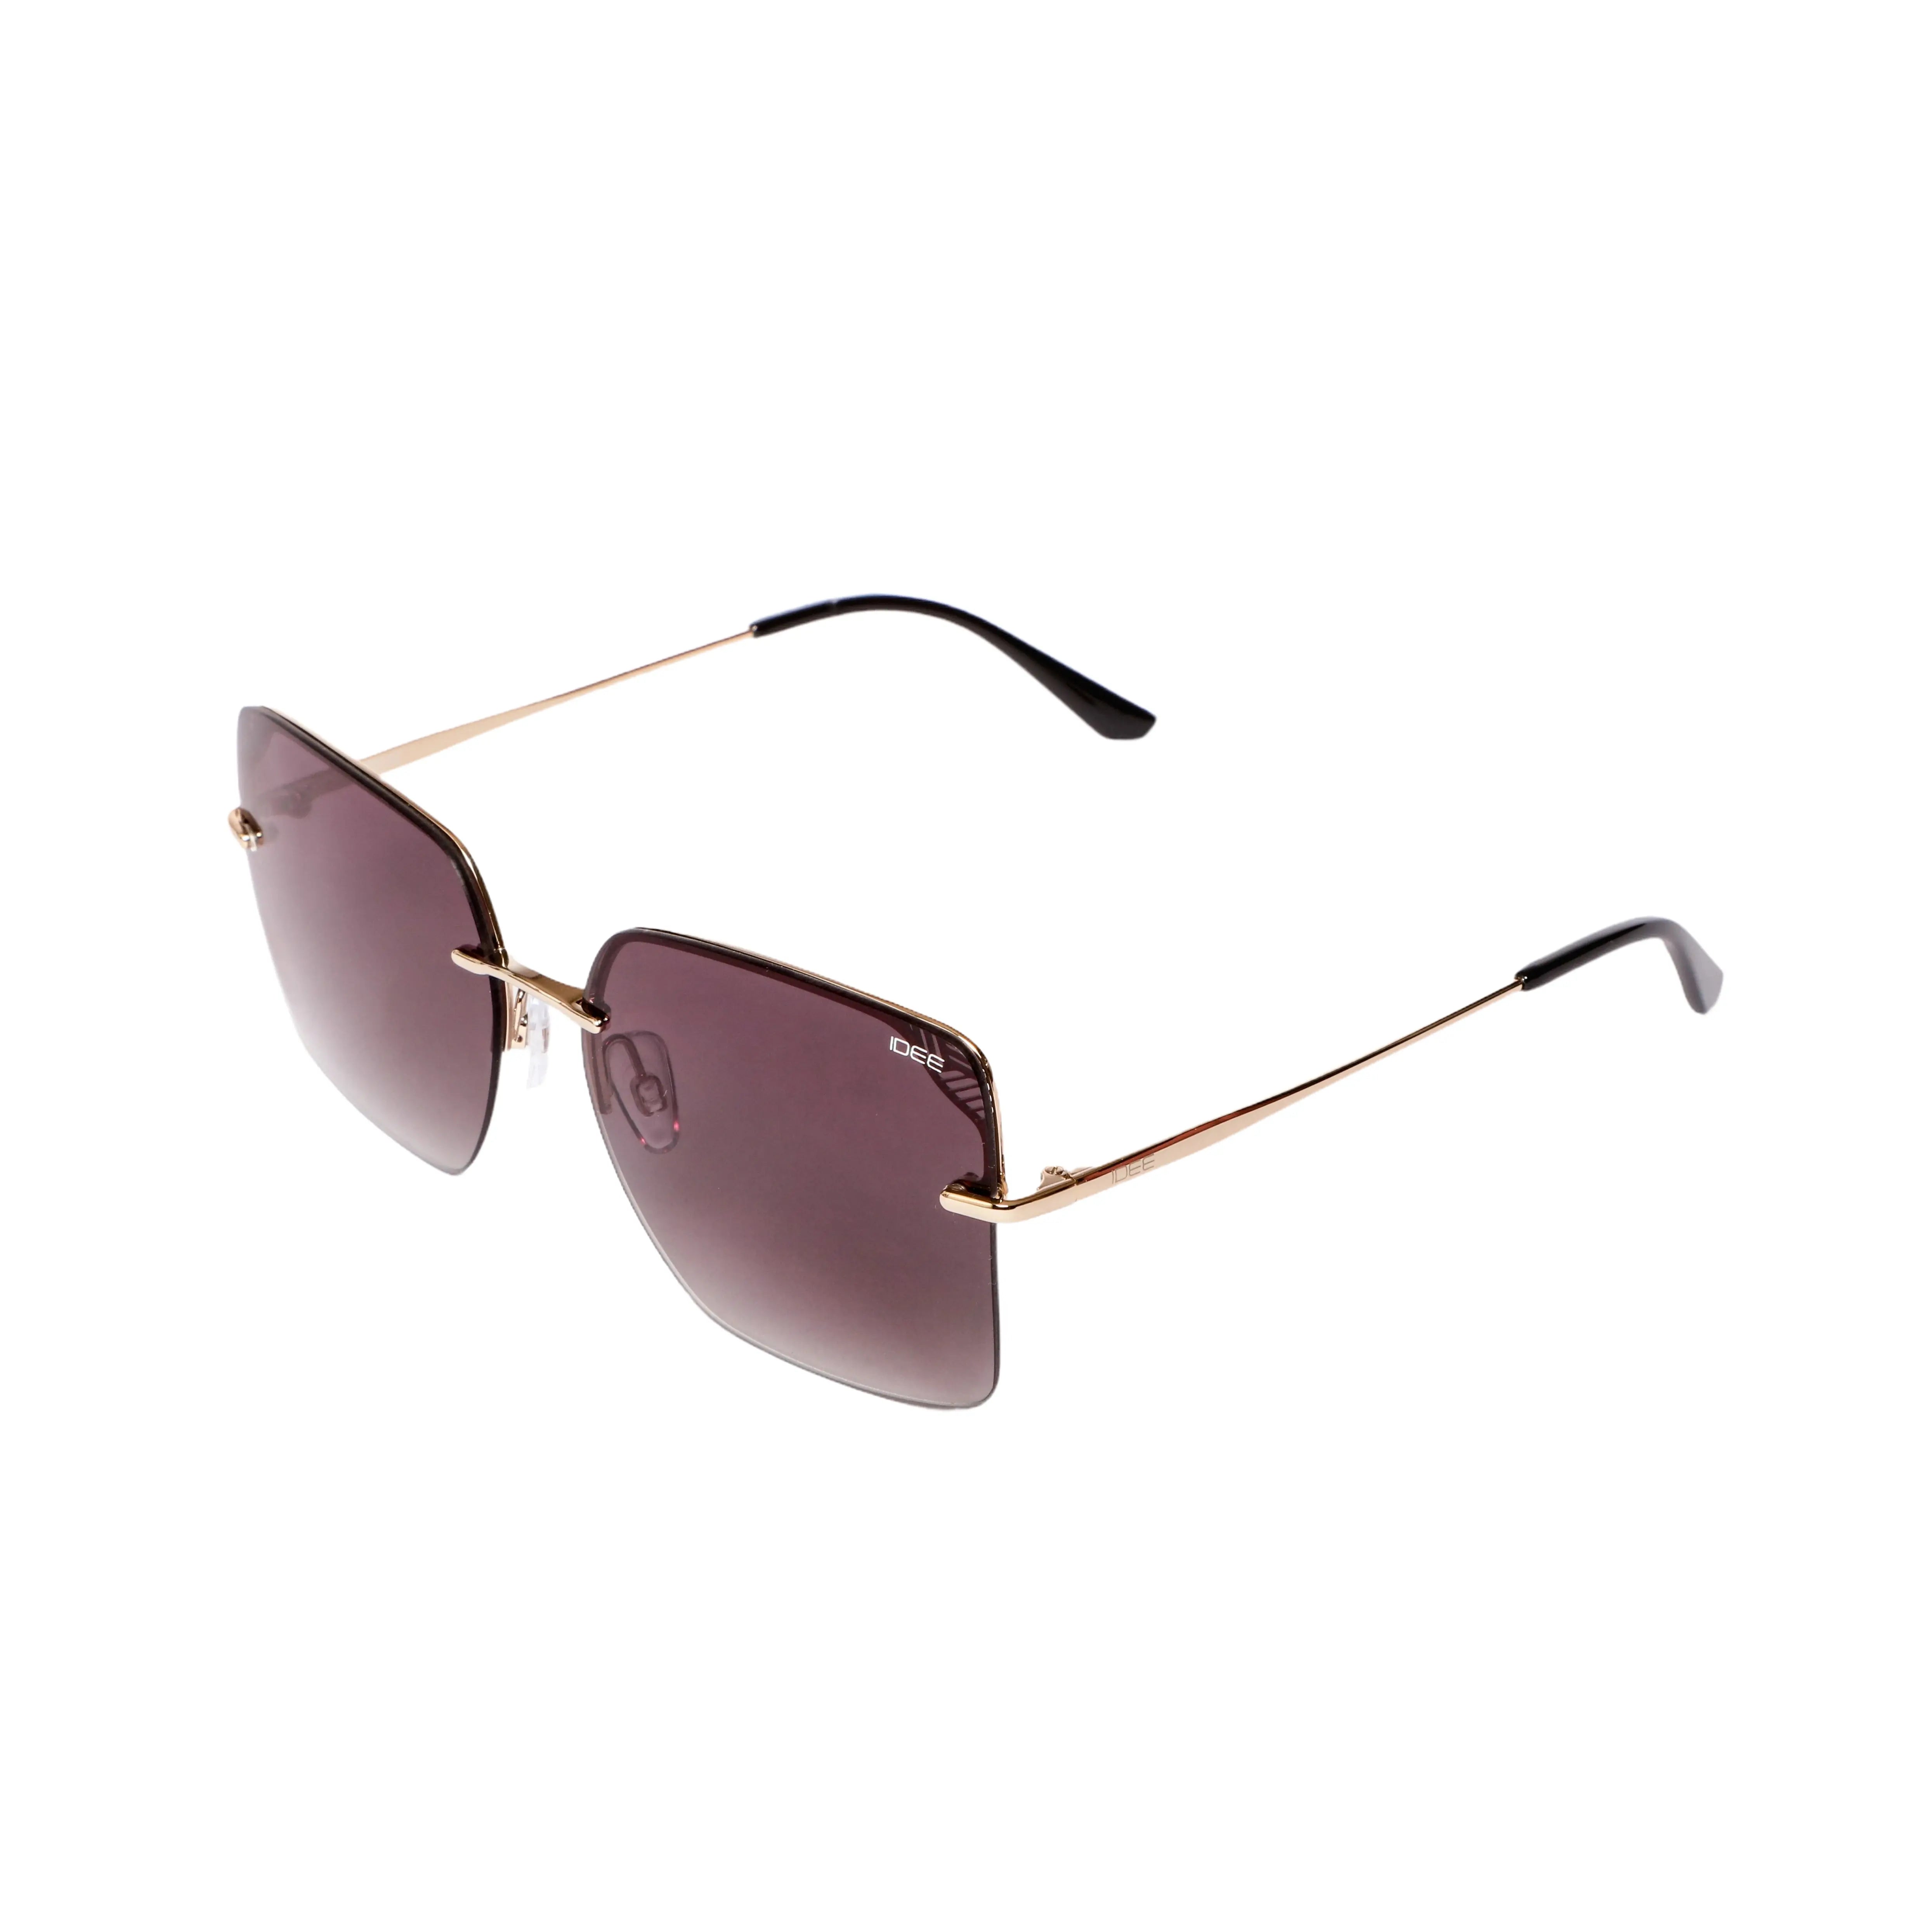 IDEE-S2805--C4 Sunglasses - Premium Sunglasses from IDEE - Just Rs. 4380! Shop now at Laxmi Opticians